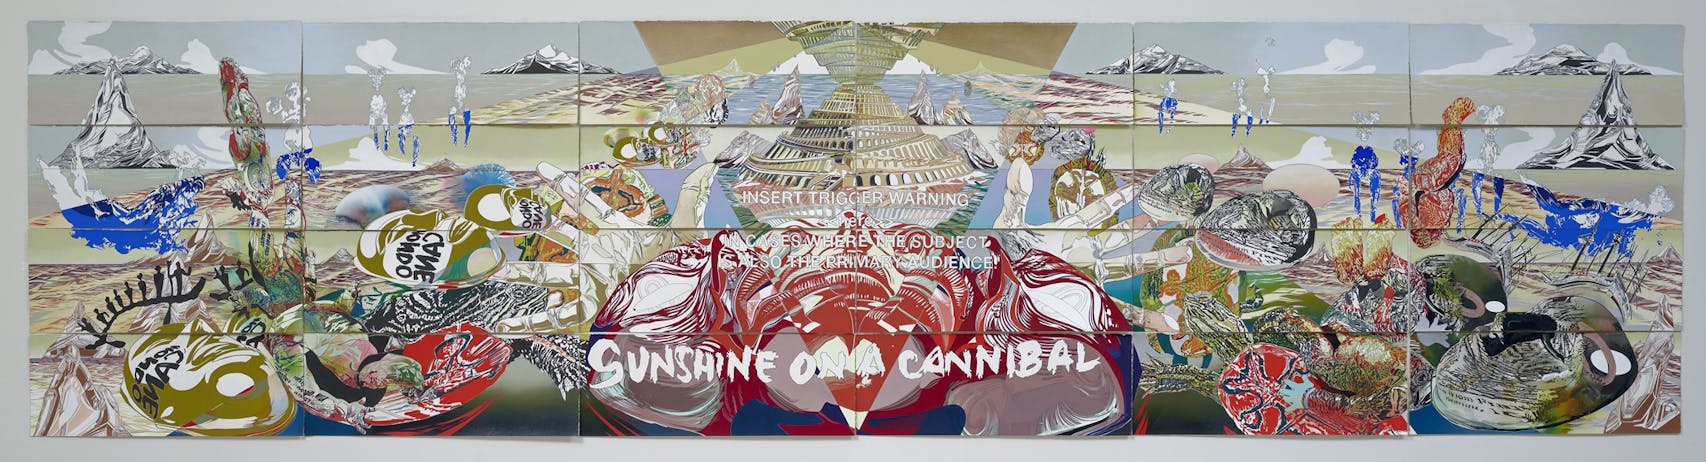 'Sunshine on a Cannibal' by Andrea Carlson, who interrogates pop-culture through massive, multi-horizon works.